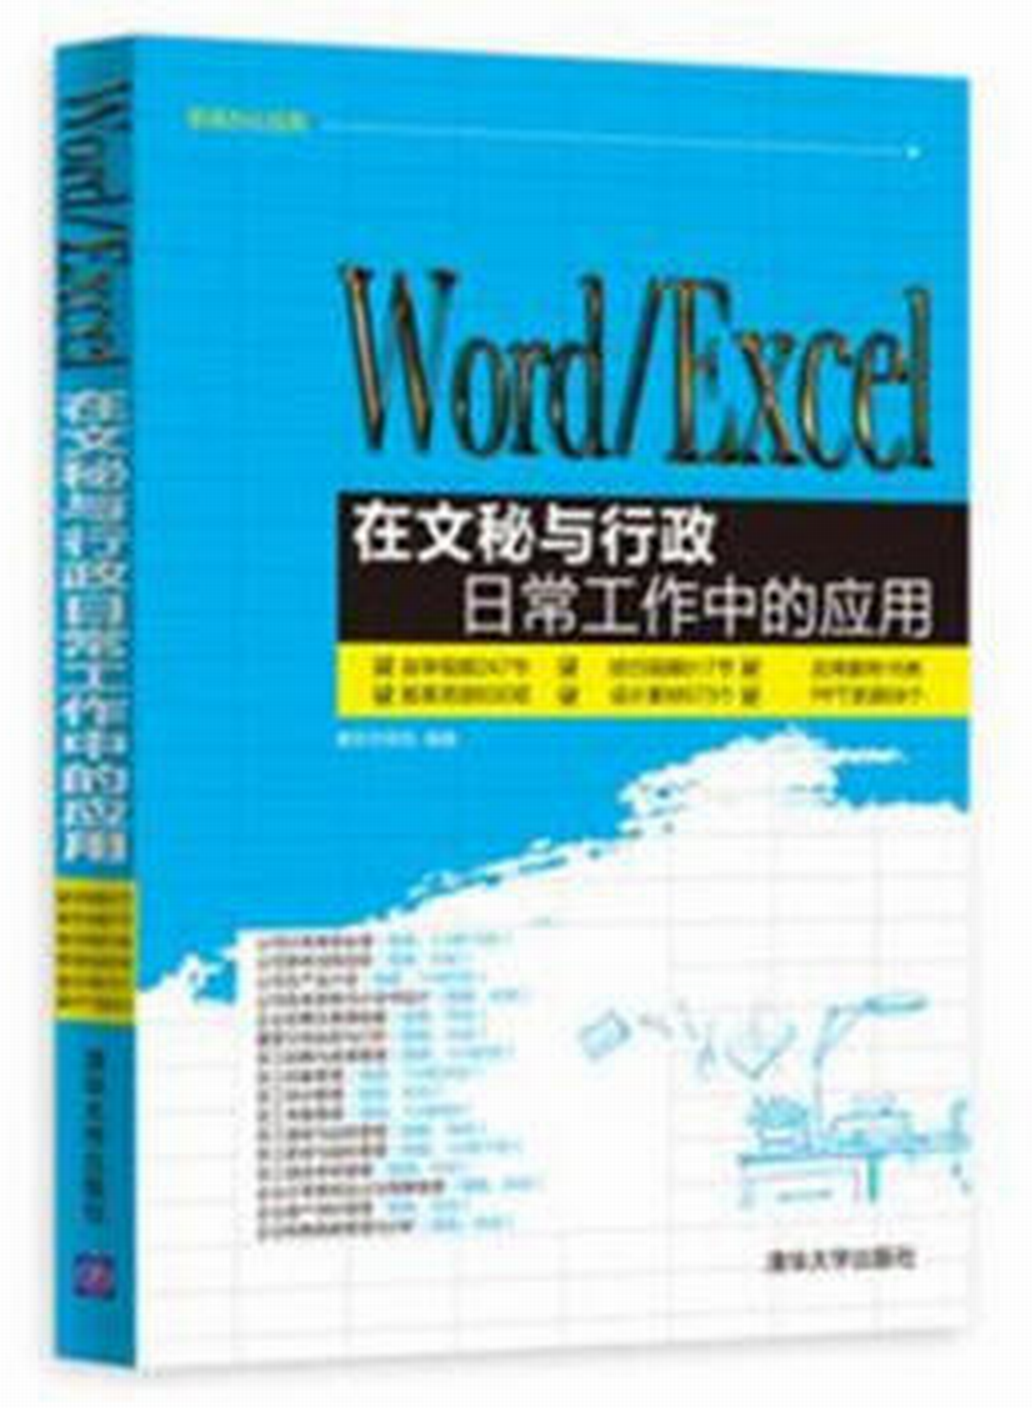 Word Excel在文秘與行政日常工作中的套用